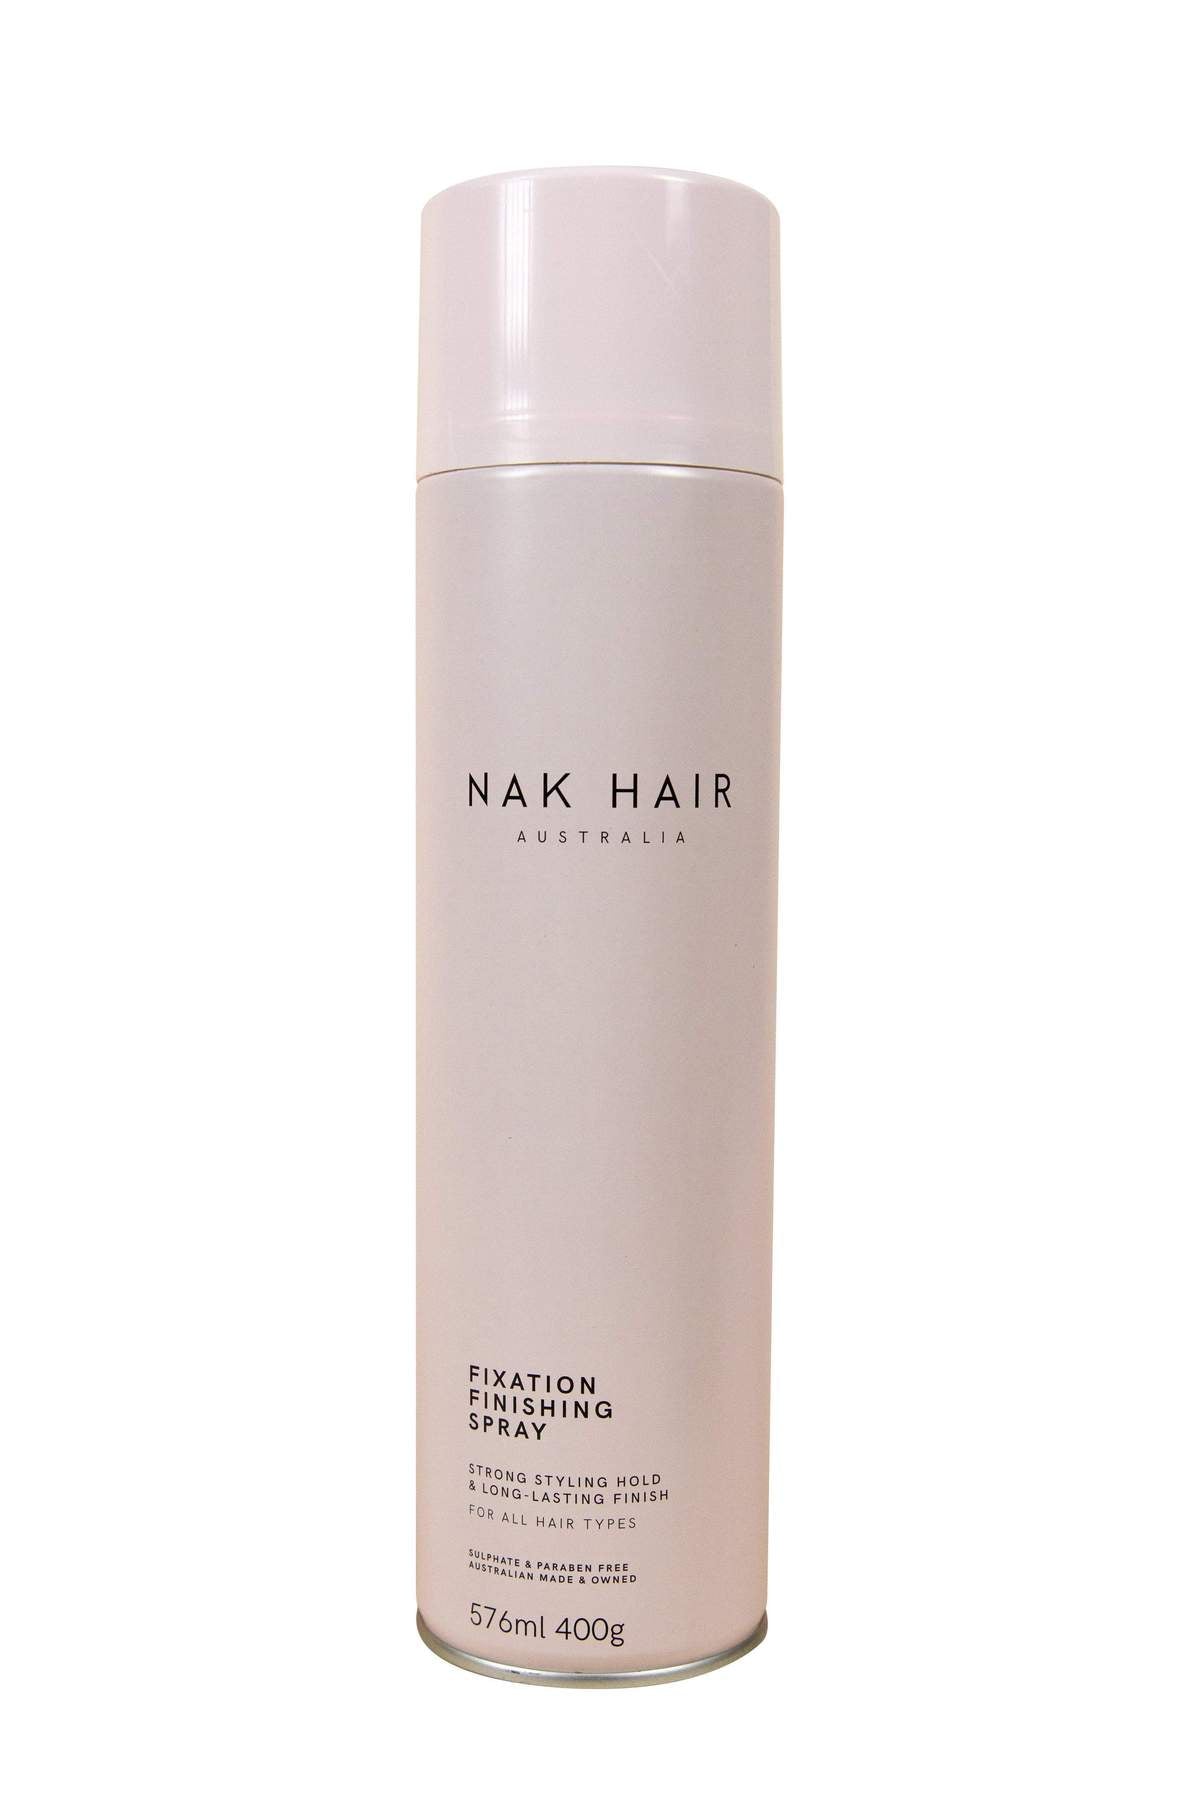 NAK Fixation Finishing Spray 400g Hair - Nak Hair - Luxe Pacifique